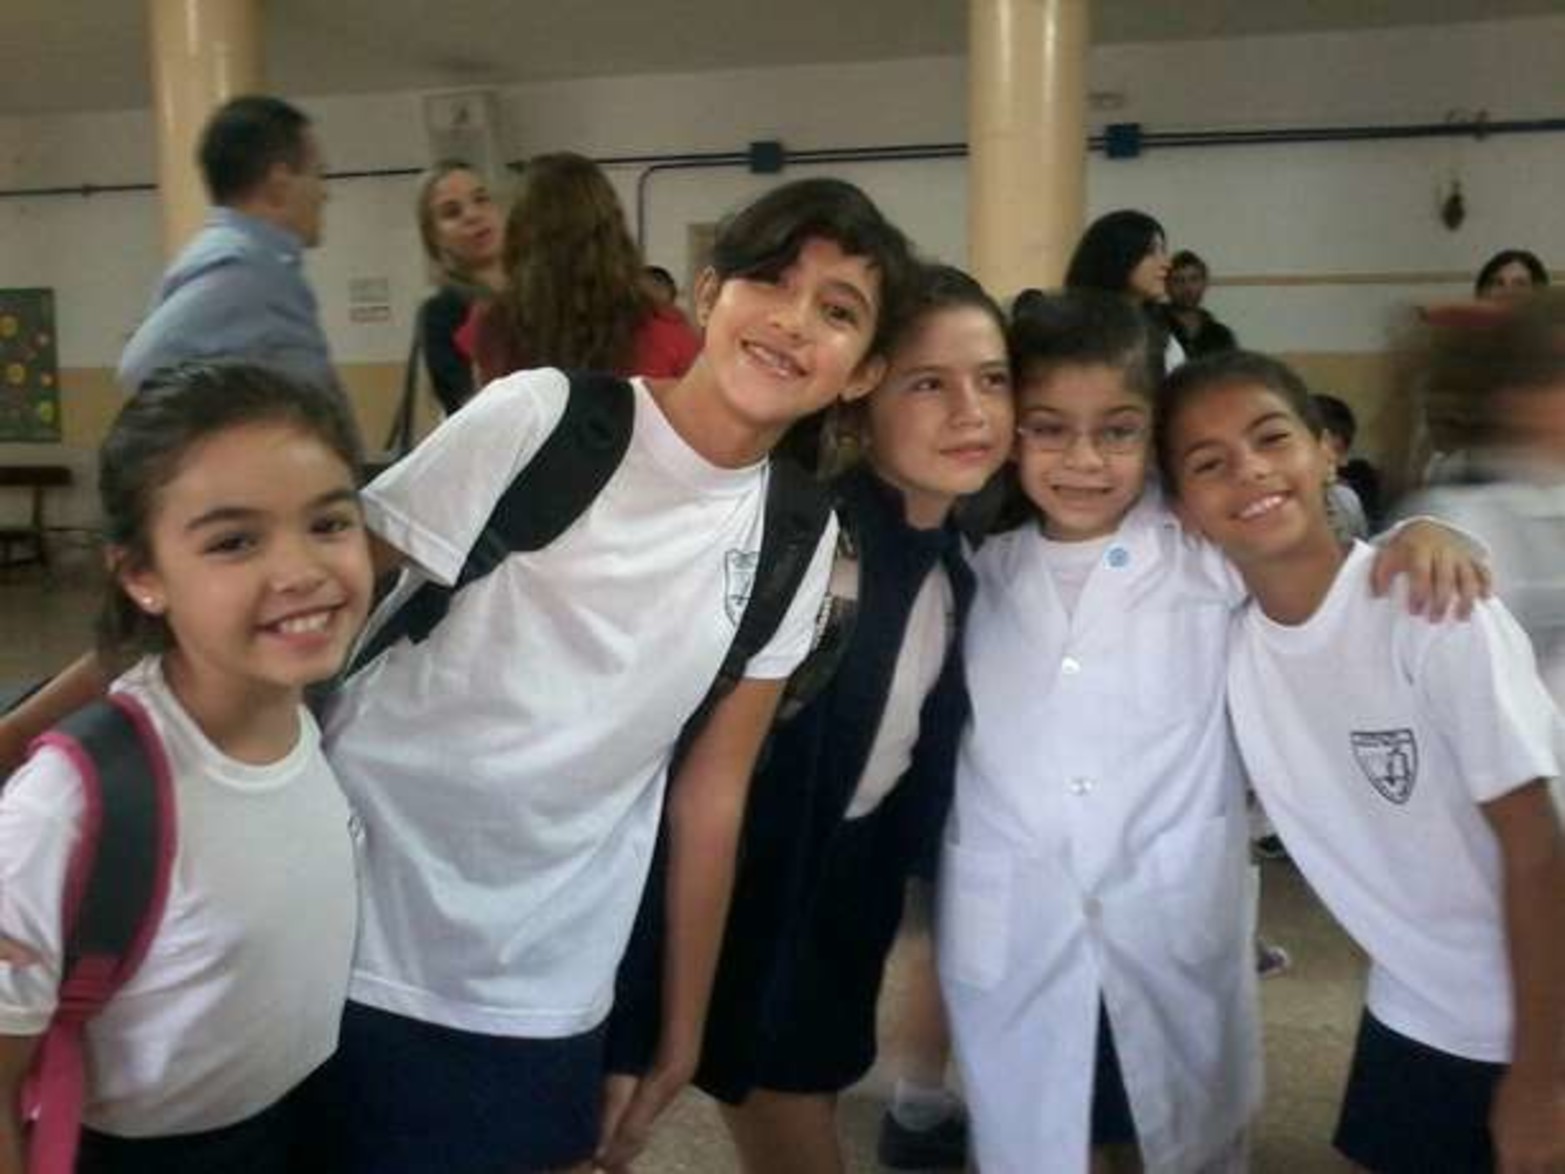 Buen dia! Envio foto del primer dia de clases. Chicas de 5to Grado Escuela Mariano Moreno. Turno Mañana. Vicky, Ludmi, Coty, Giana y Ceci.